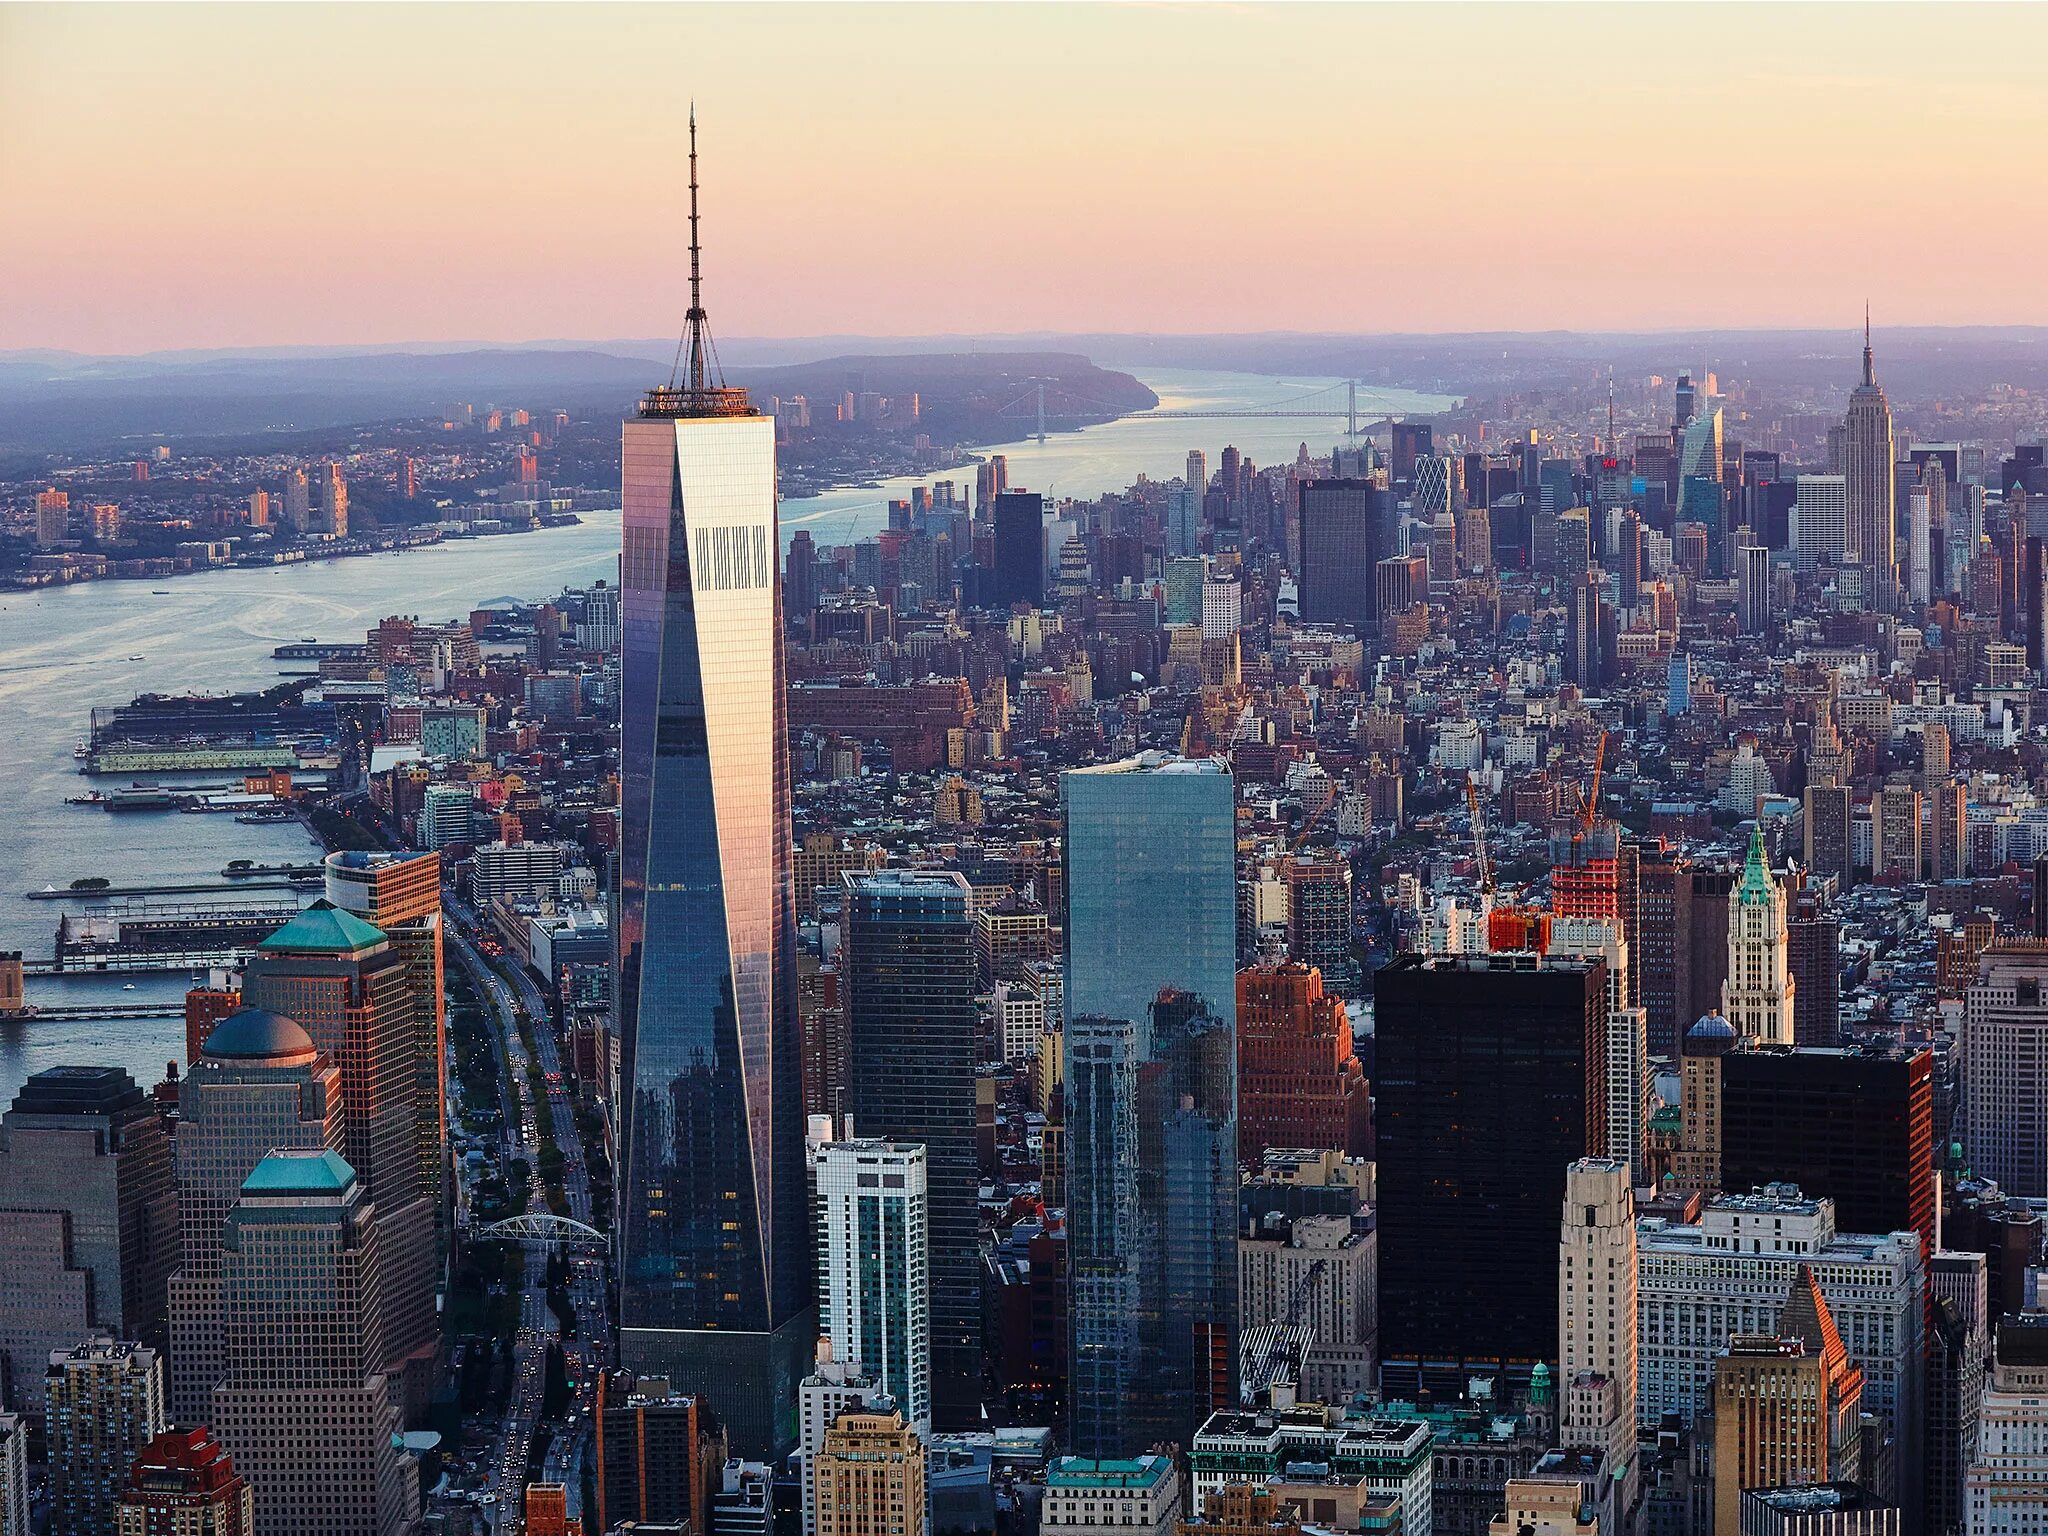 One world new york. ВТЦ 1 башня свободы. Всемирный торговый центр 1 Нью-Йорк. ВТЦ Нью-Йорк 2020. Нью-Йорк Сити WTC.